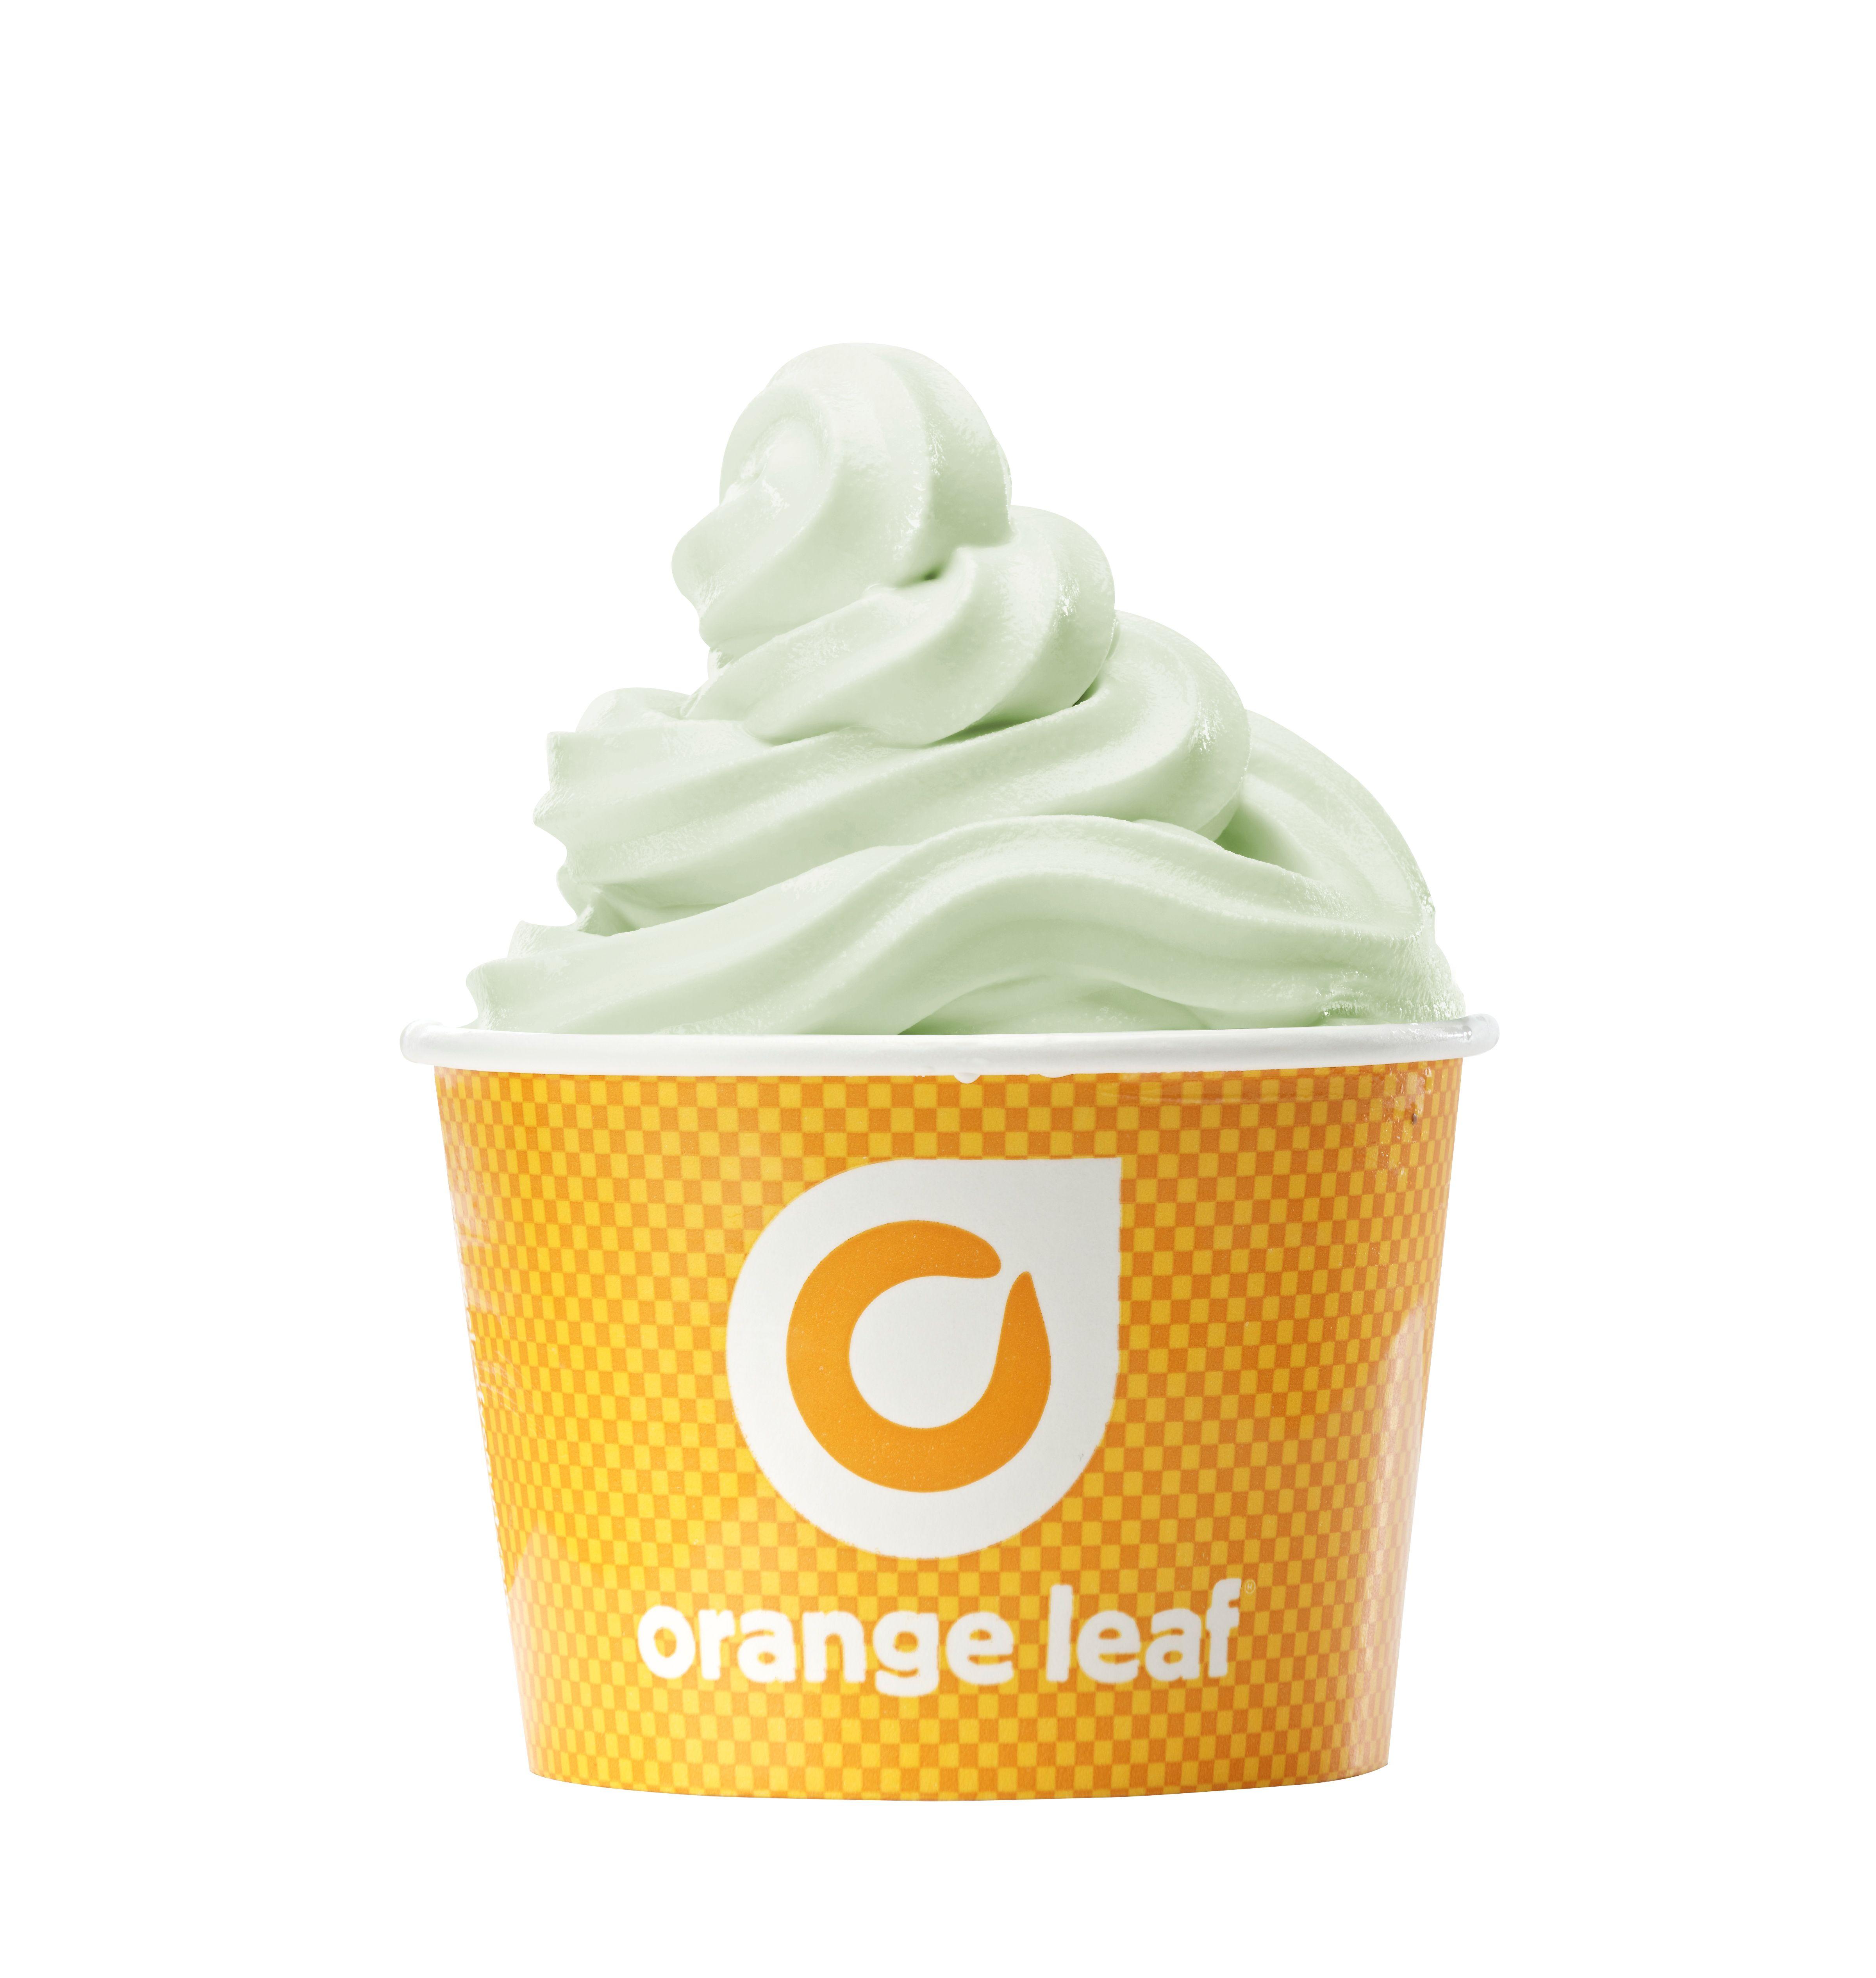 Ice Cream Orange Leaf Logo - New Pistachio Flavor Introduced by Orange Leaf Frozen Yogurt